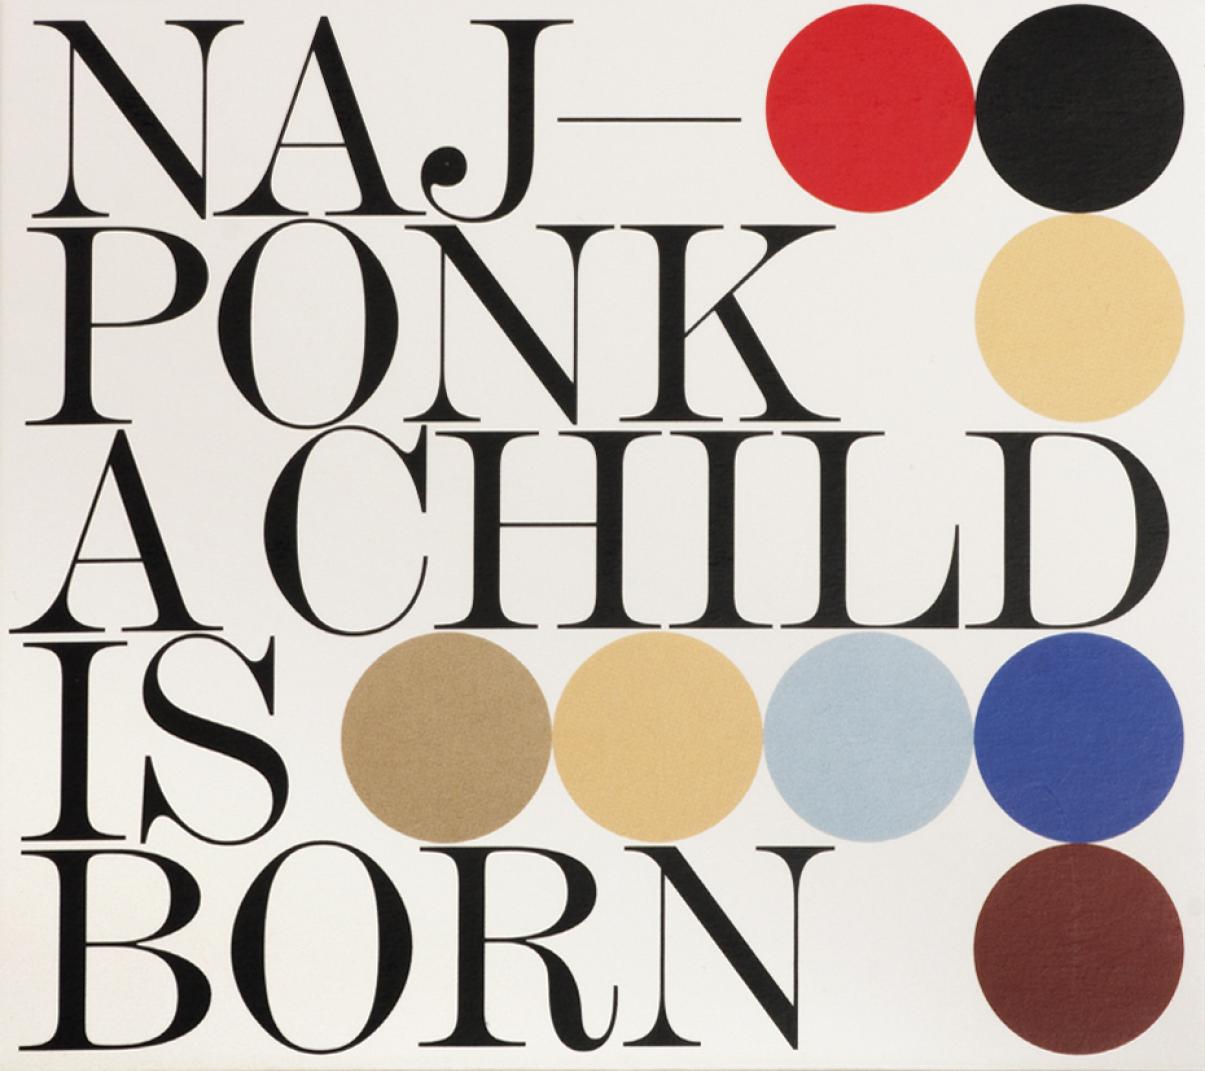 Najponk: A Child Is Born